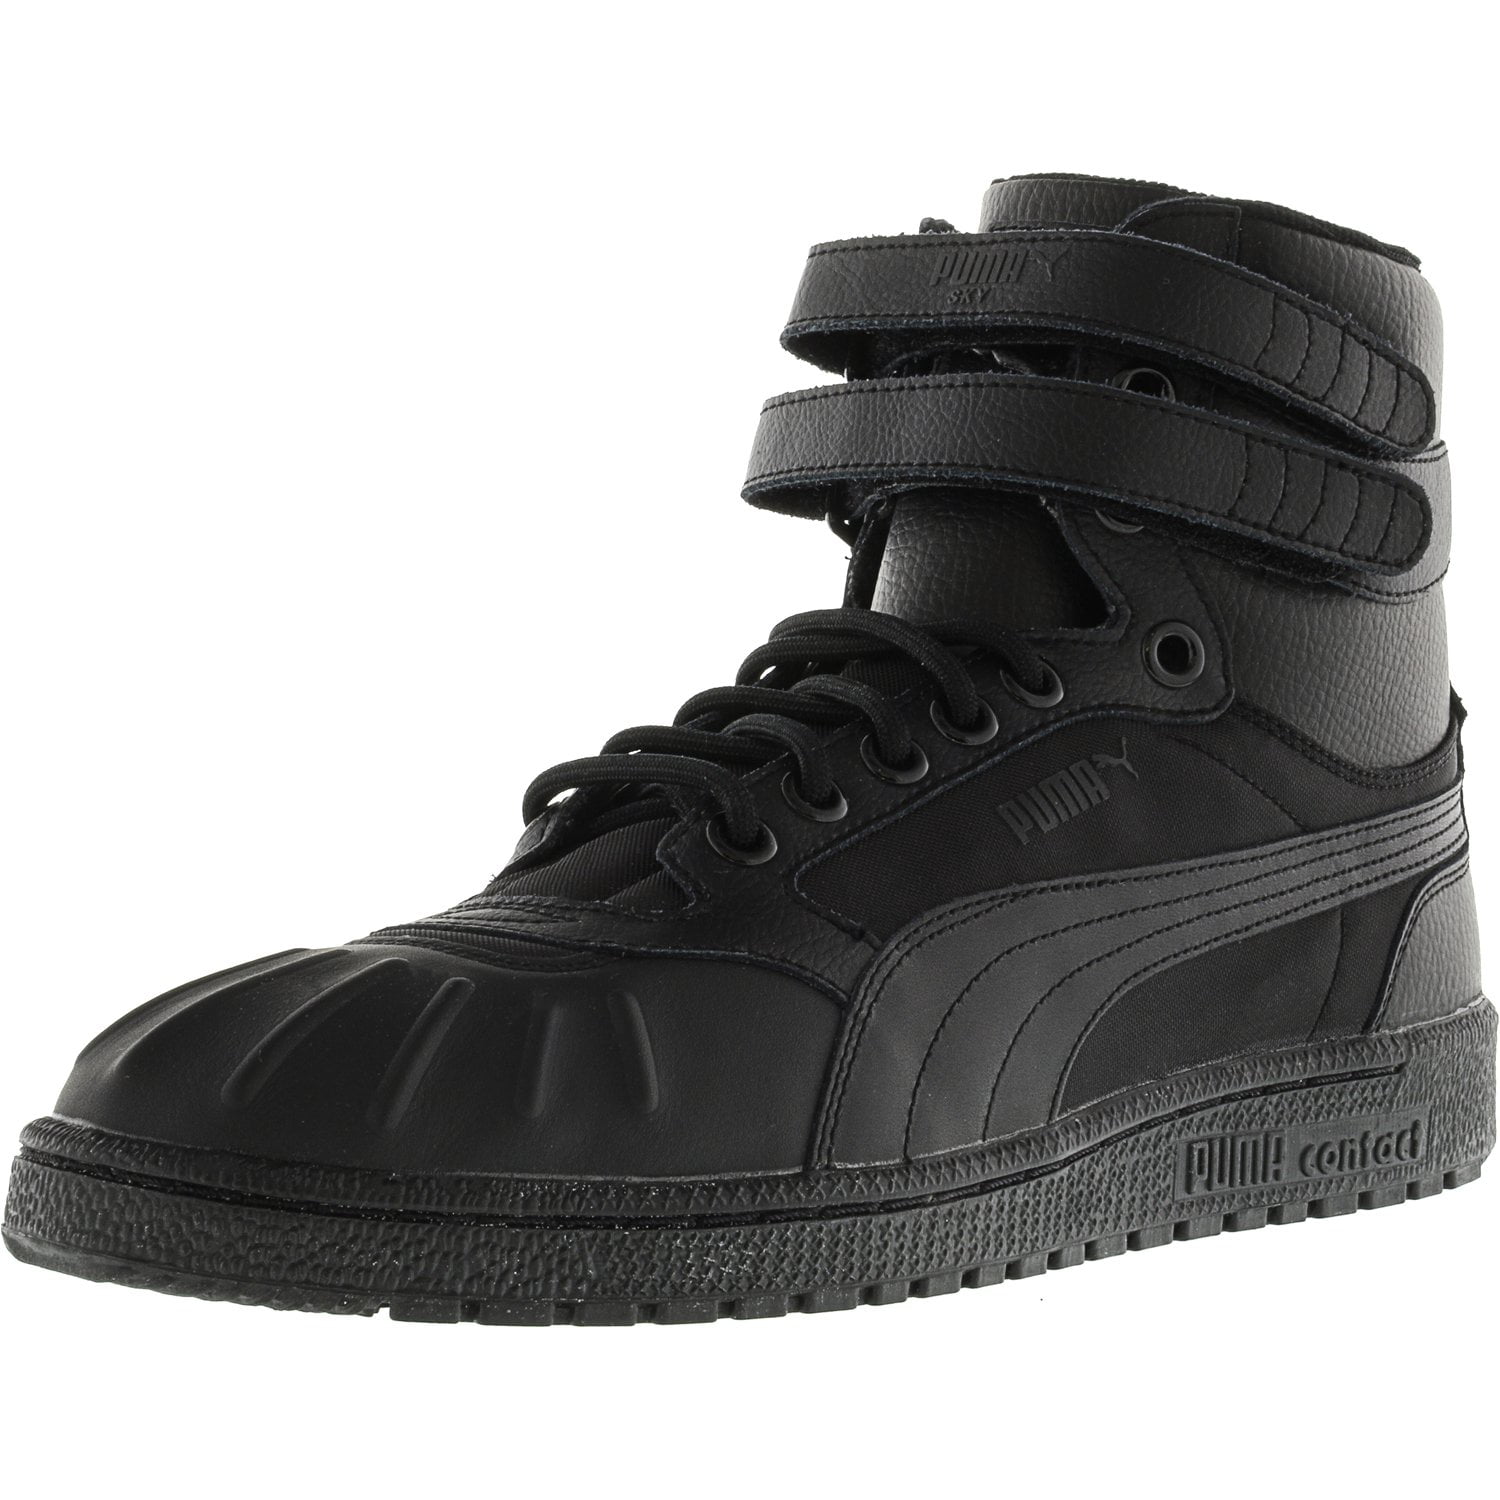 Puma Men's Sky Ii Hi Duck Boot Black Ankle-High Leather Fashion Sneaker ...